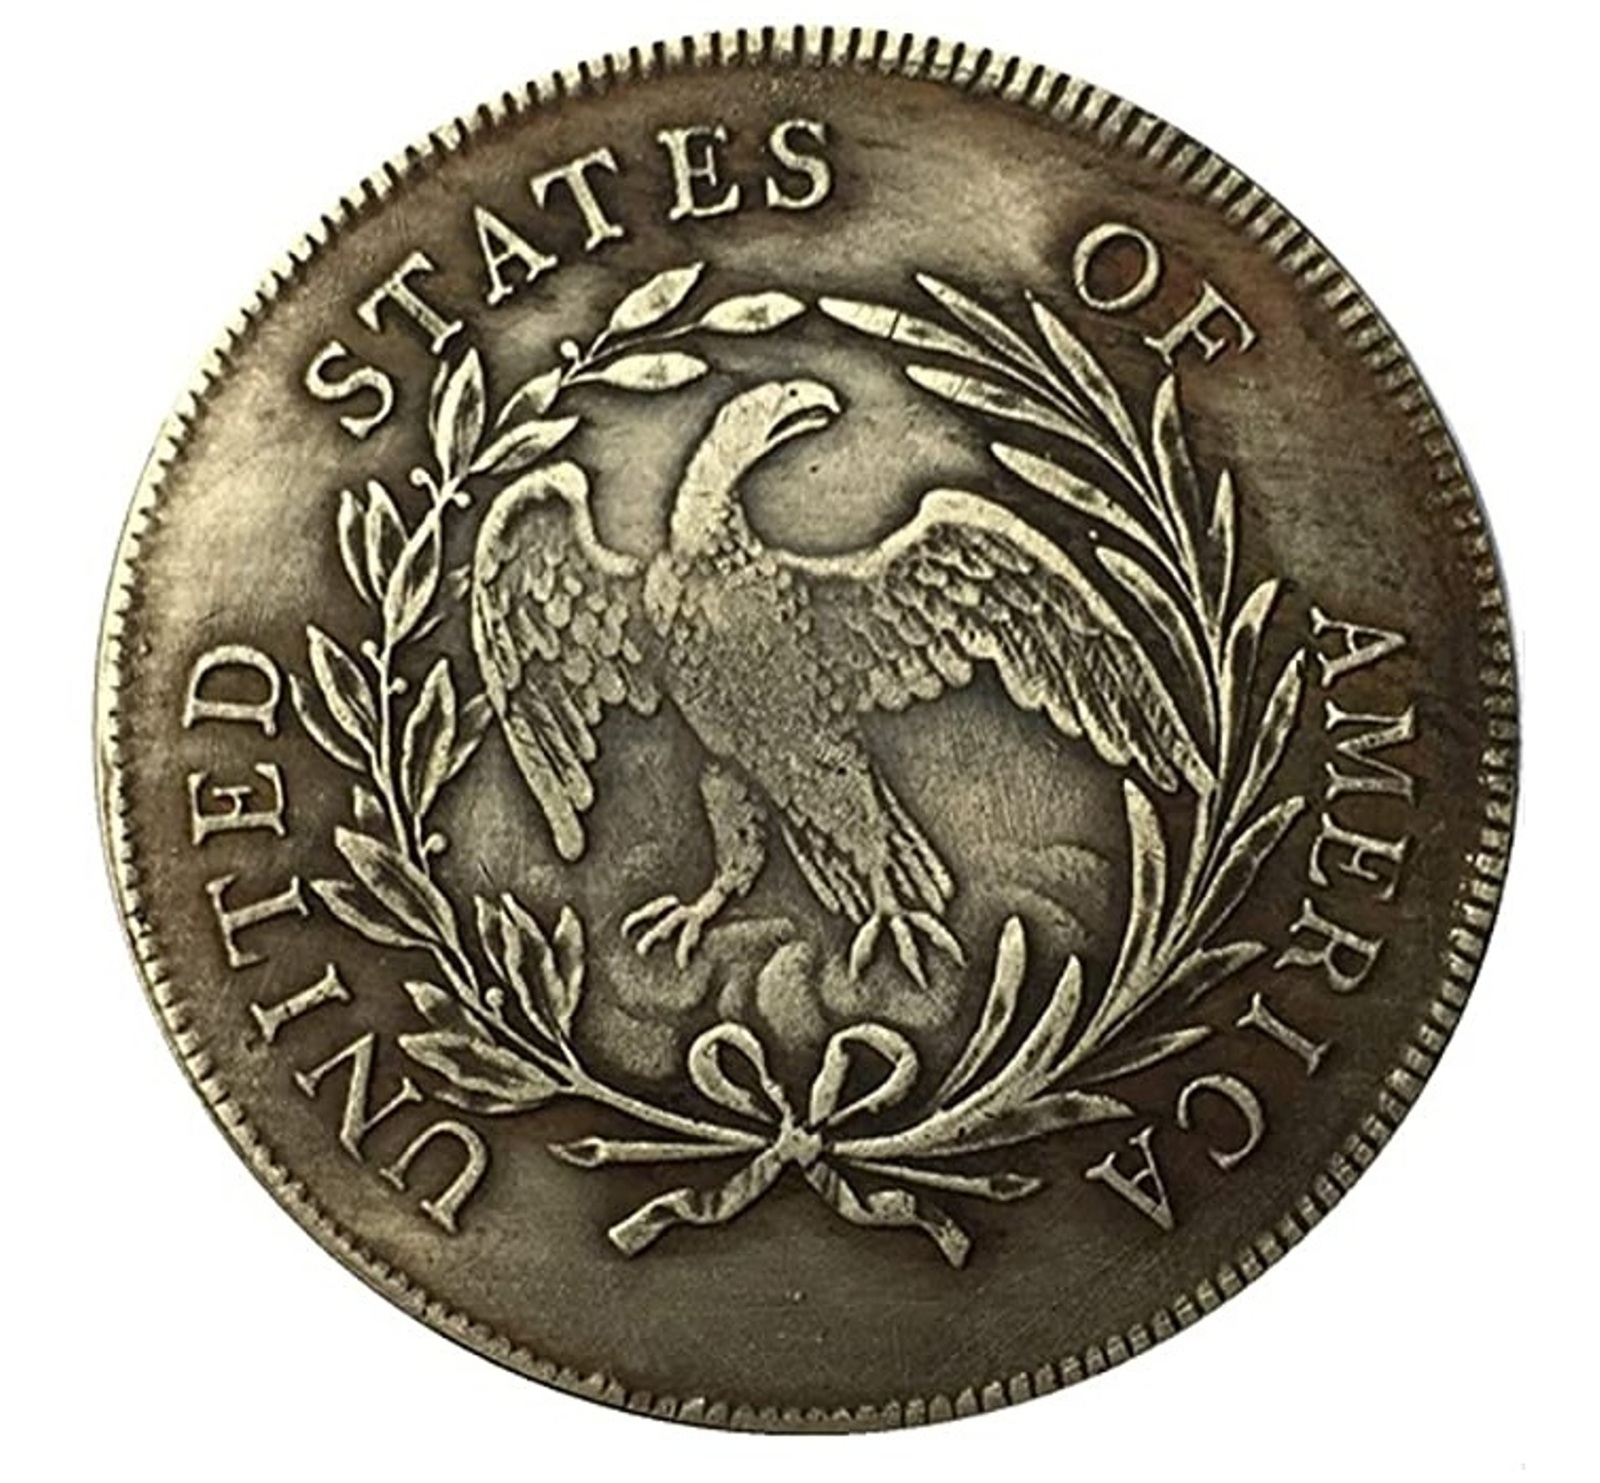 Rare Antique Usa United States 1796 Liberty Silver Color Dollar Coin